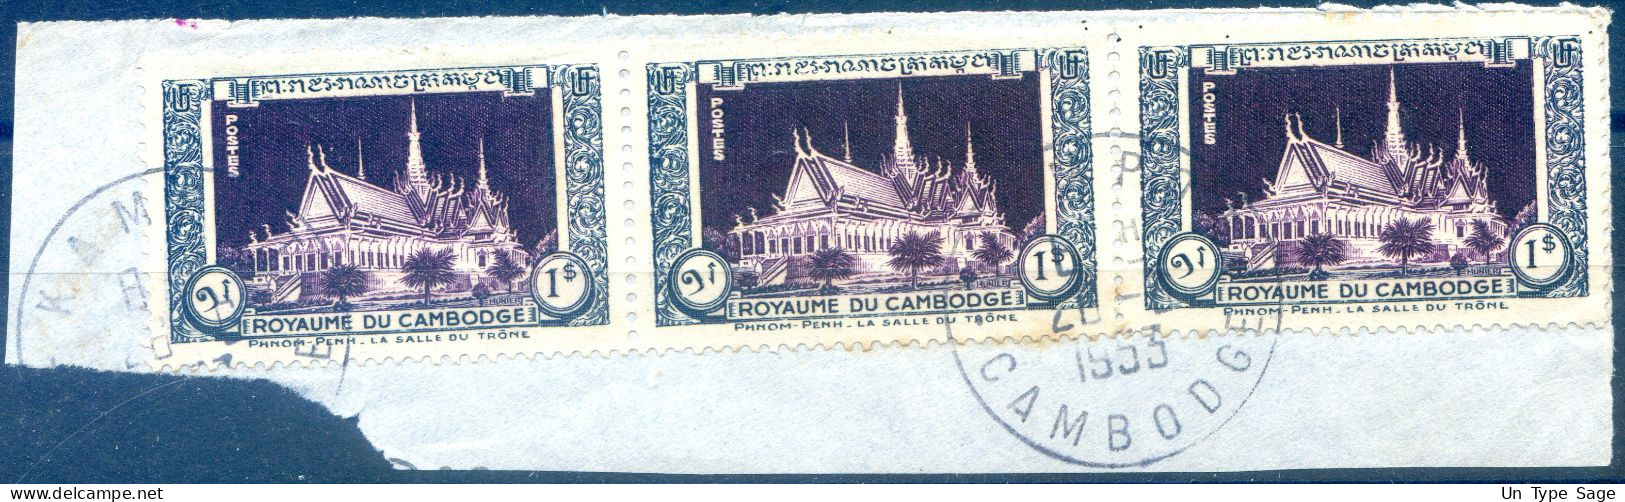 Cambodge, TAD PHNOM PENH 1953 - (F359) - Cambodja